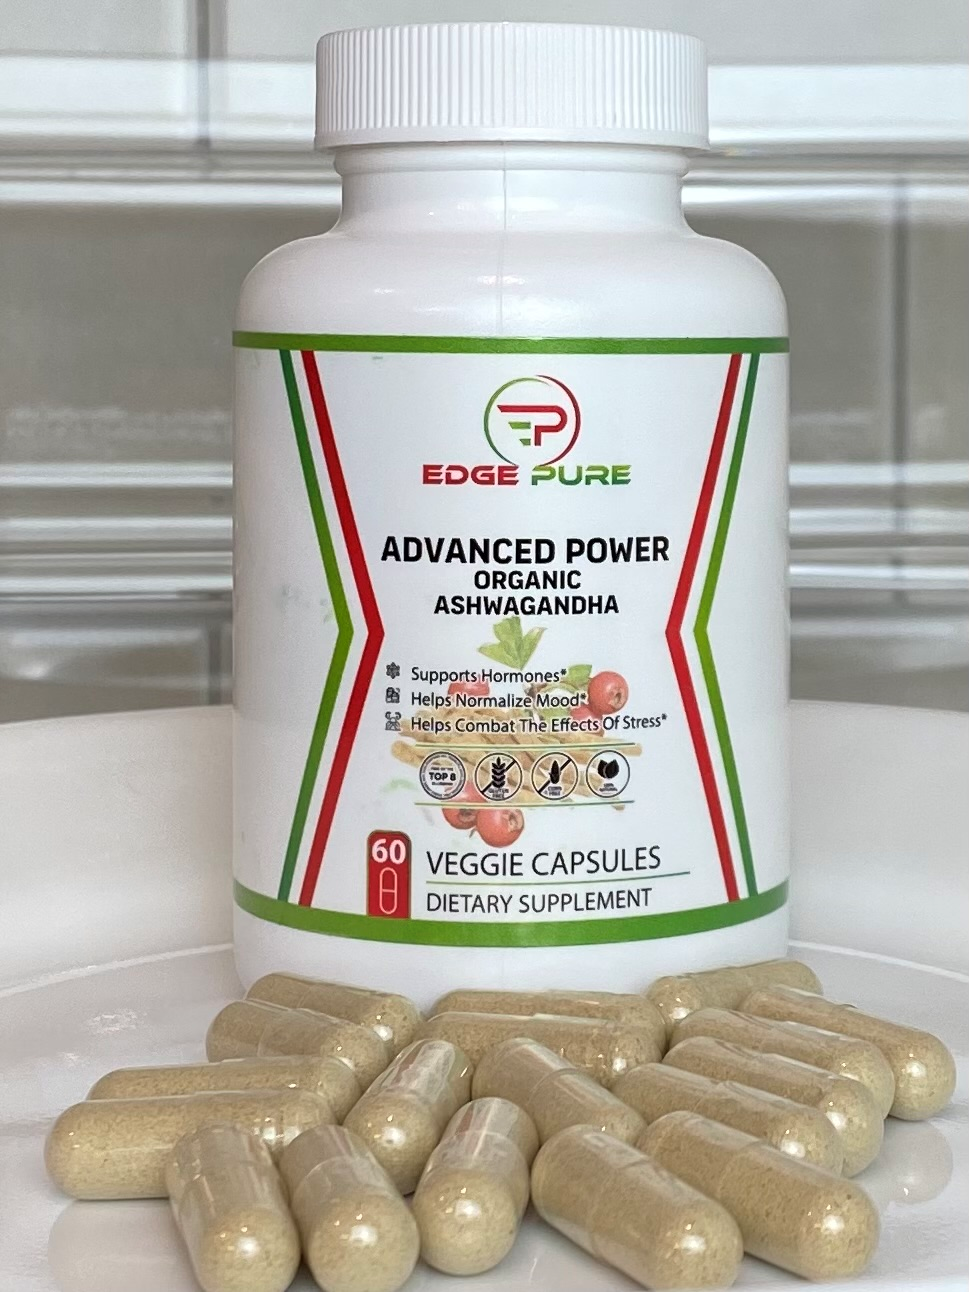 Advanced Power Organic Ashwagandha Edge Pure